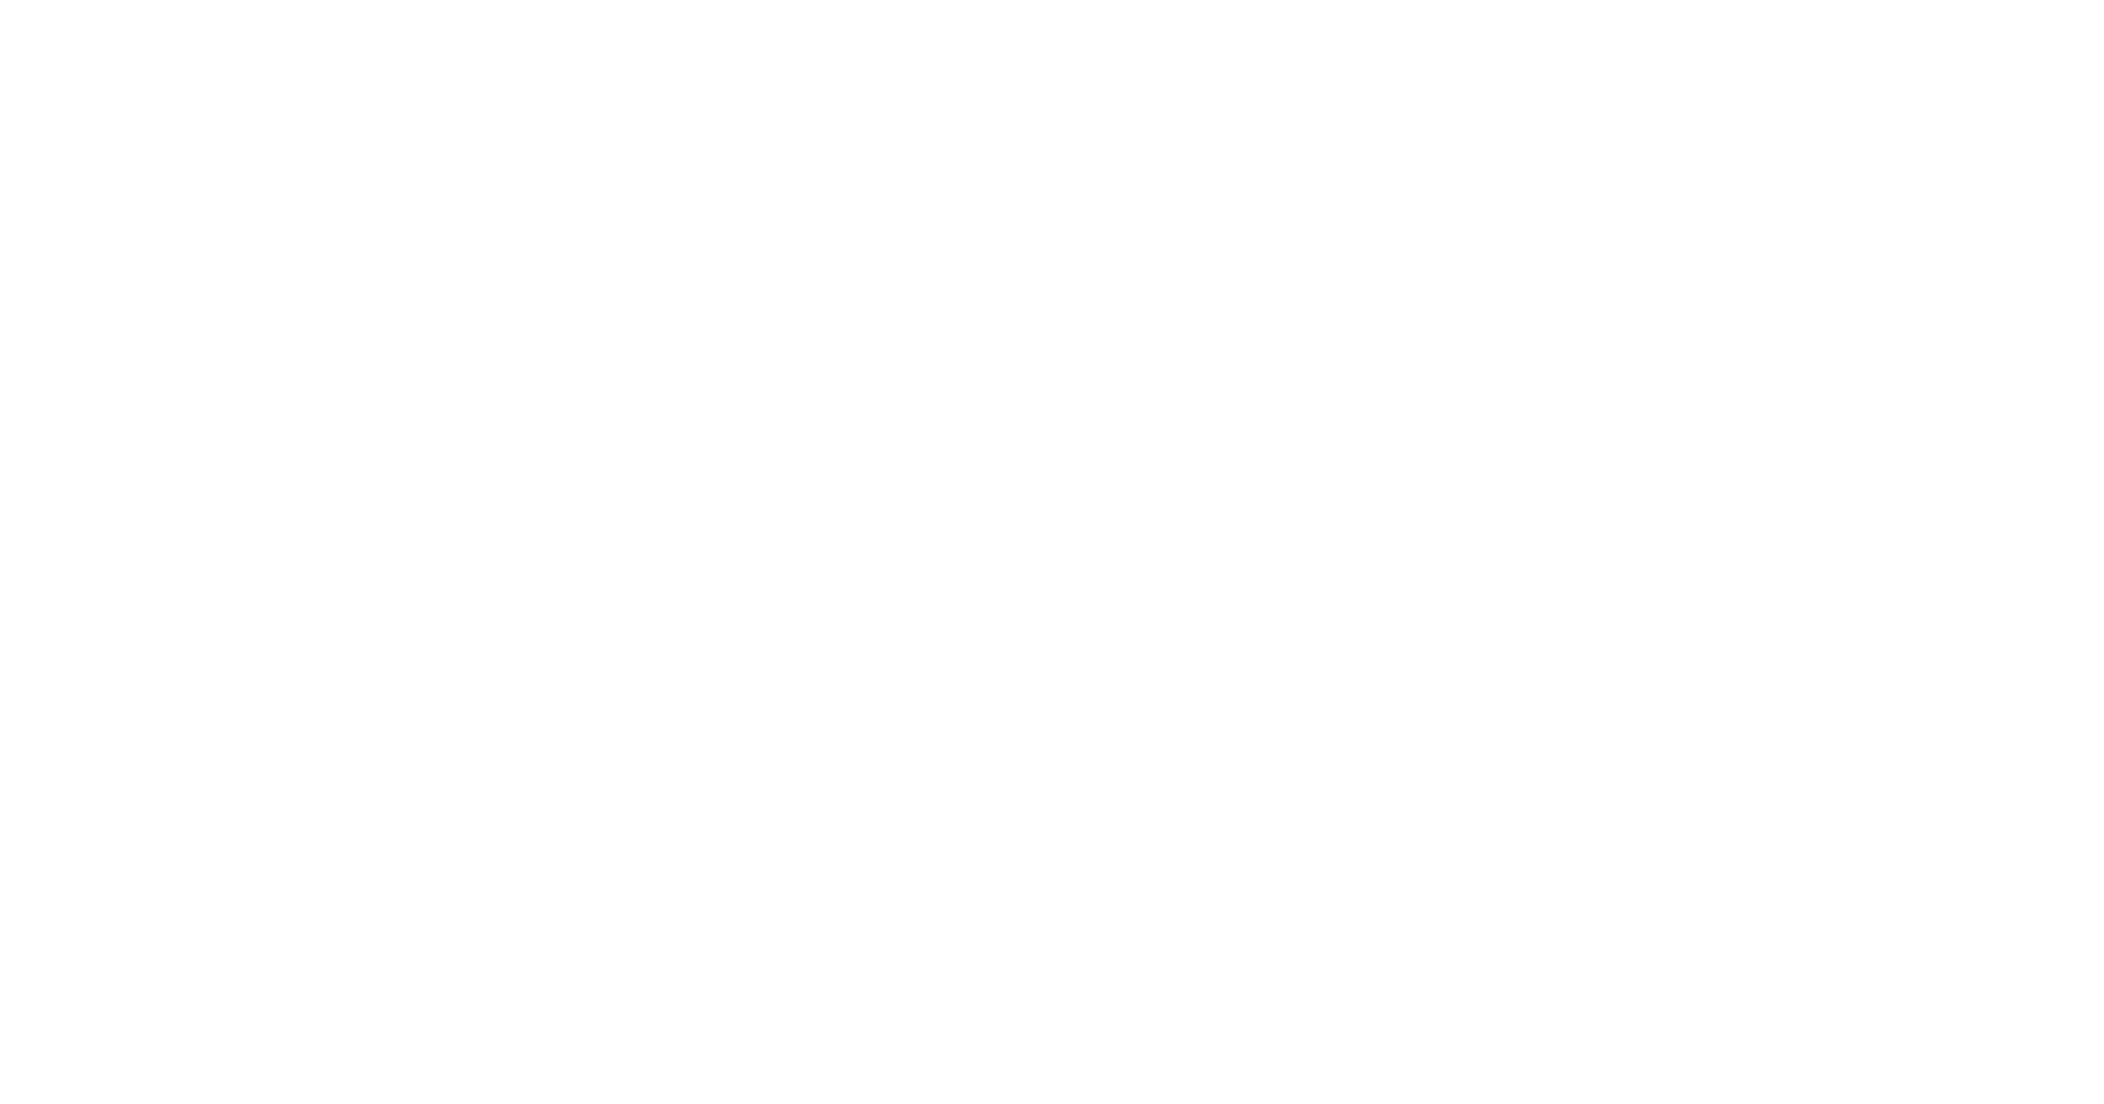 Guild Wines